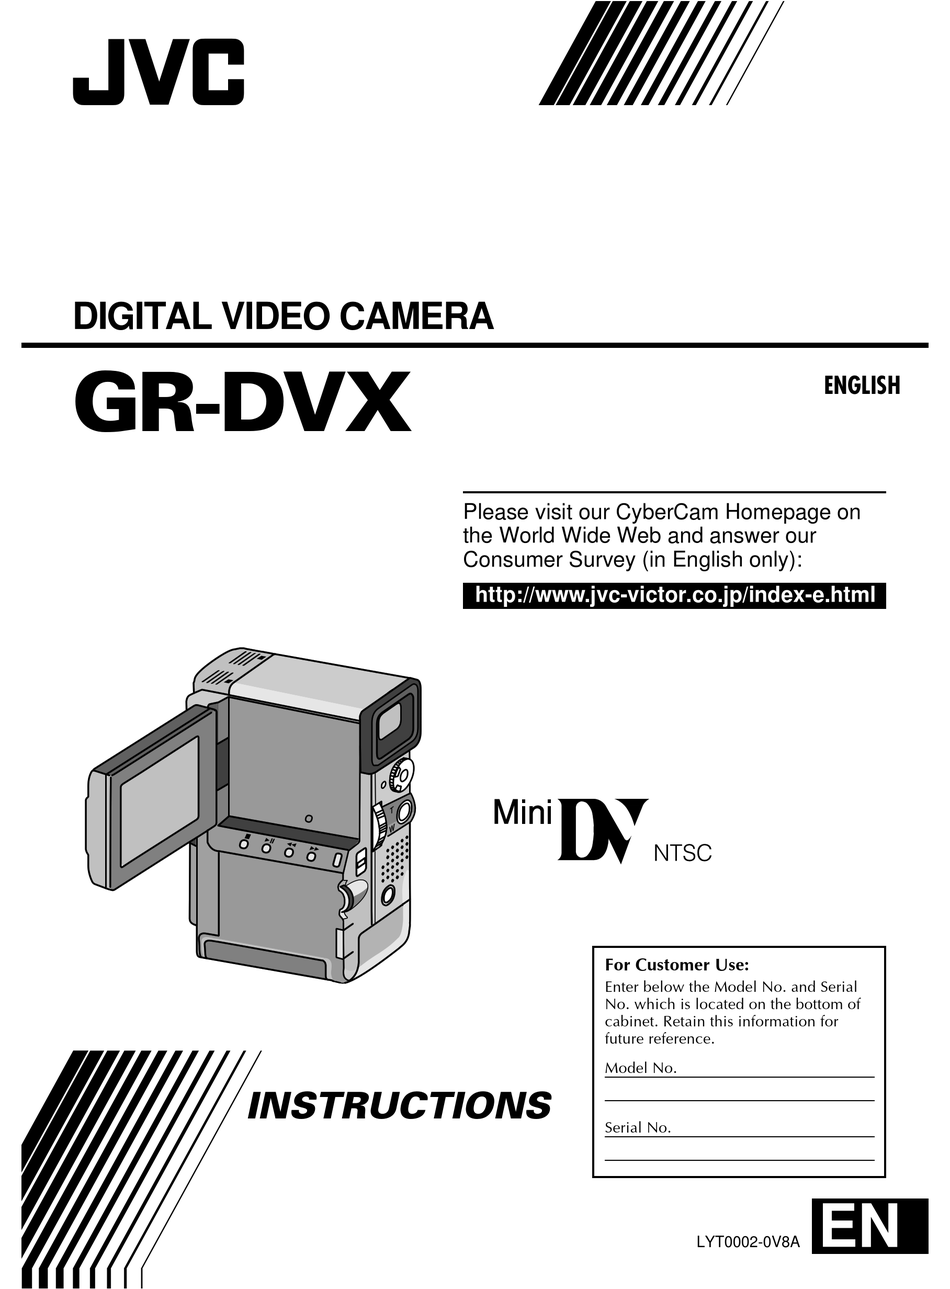 JVC GR-DVX INSTRUCTIONS MANUAL Pdf Download | ManualsLib